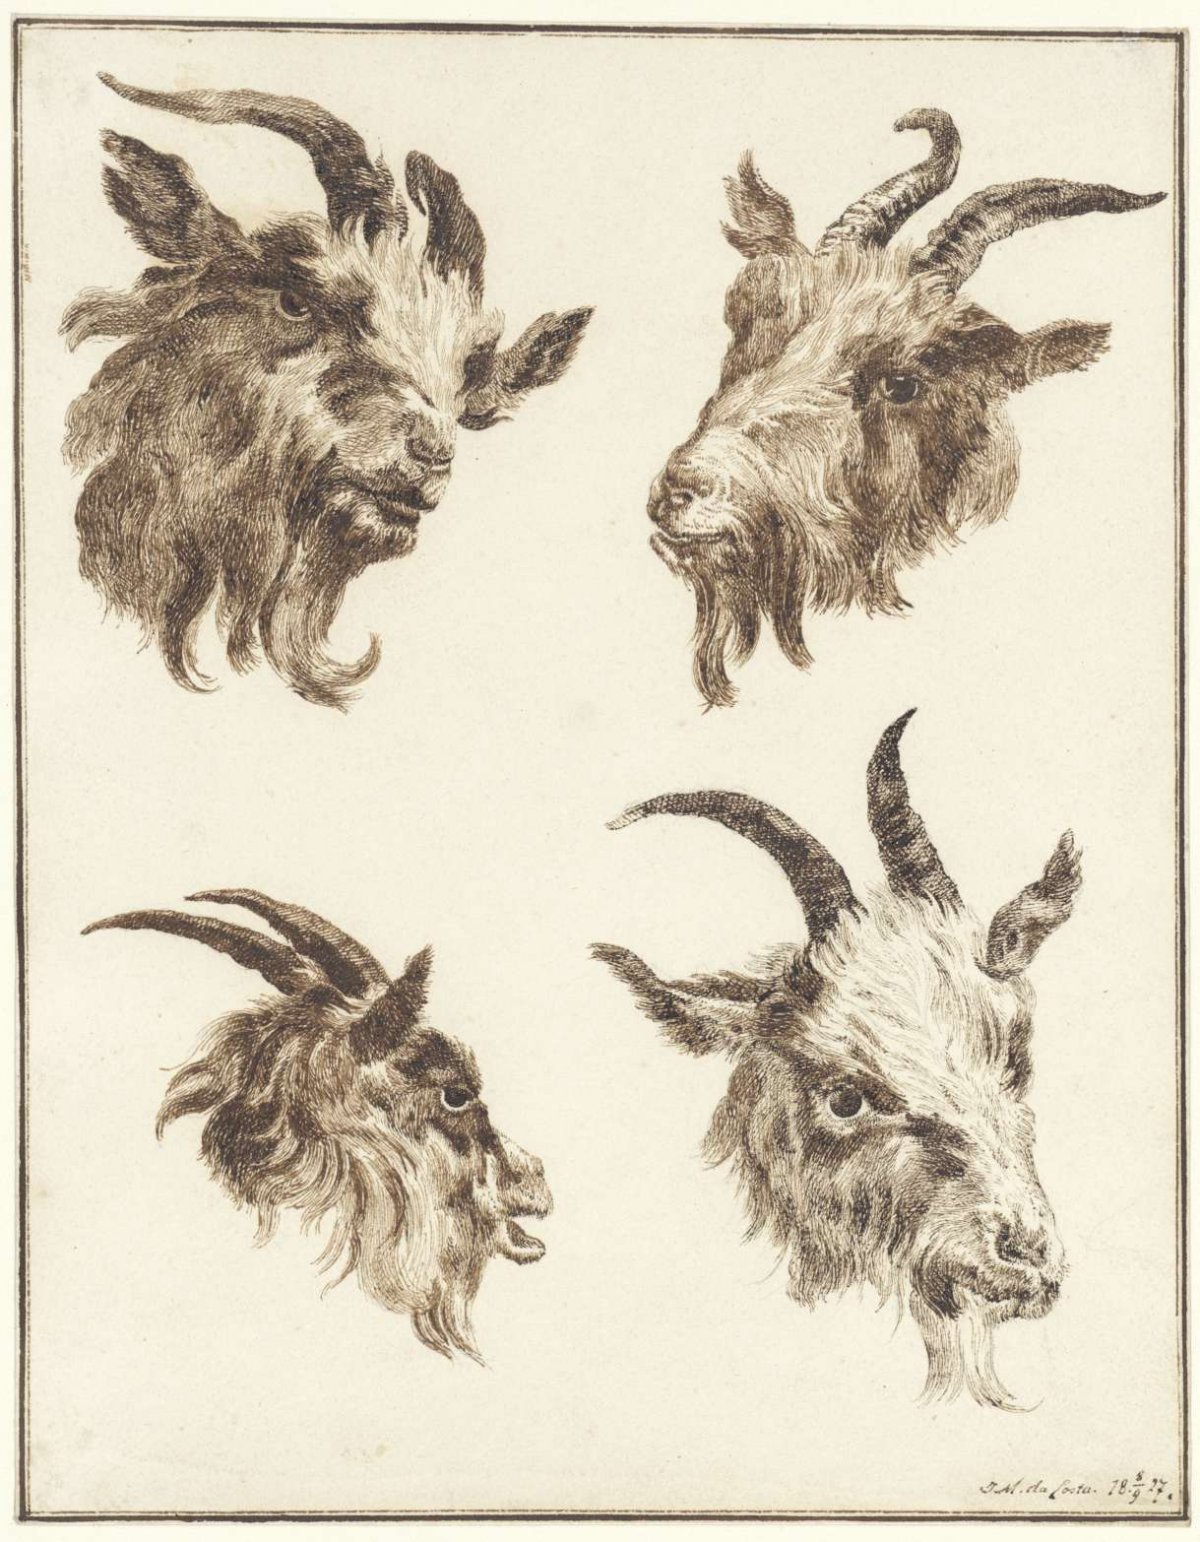 Four studies of goat heads, Joseph Mendes da Costa (1806-1893), 1827